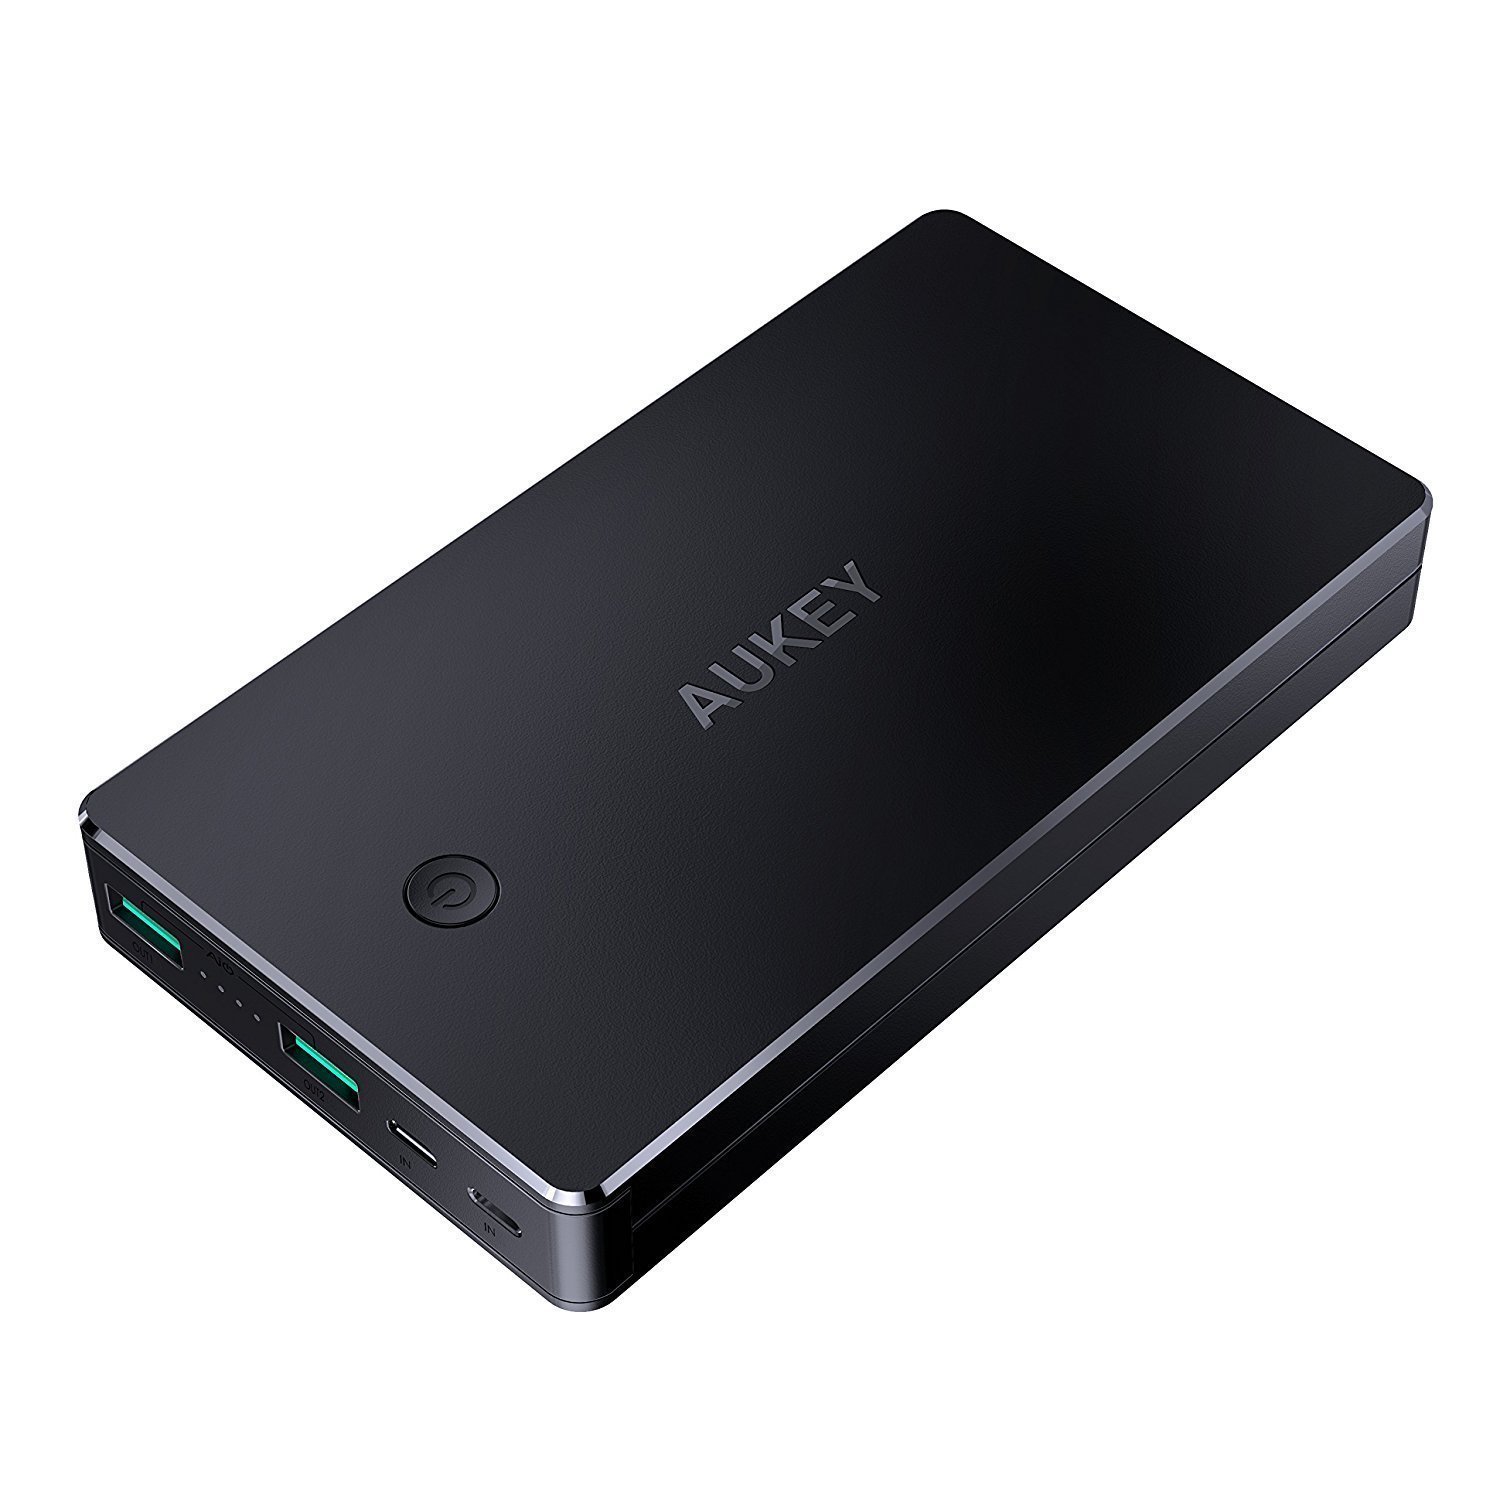 Aukey 20000mAh 移动电源，带闪电和微型输入便携式充电器，3.4A 双 USB 输出电池组，适用于 iPhone X / 8 / Plus、iPad Pro 等